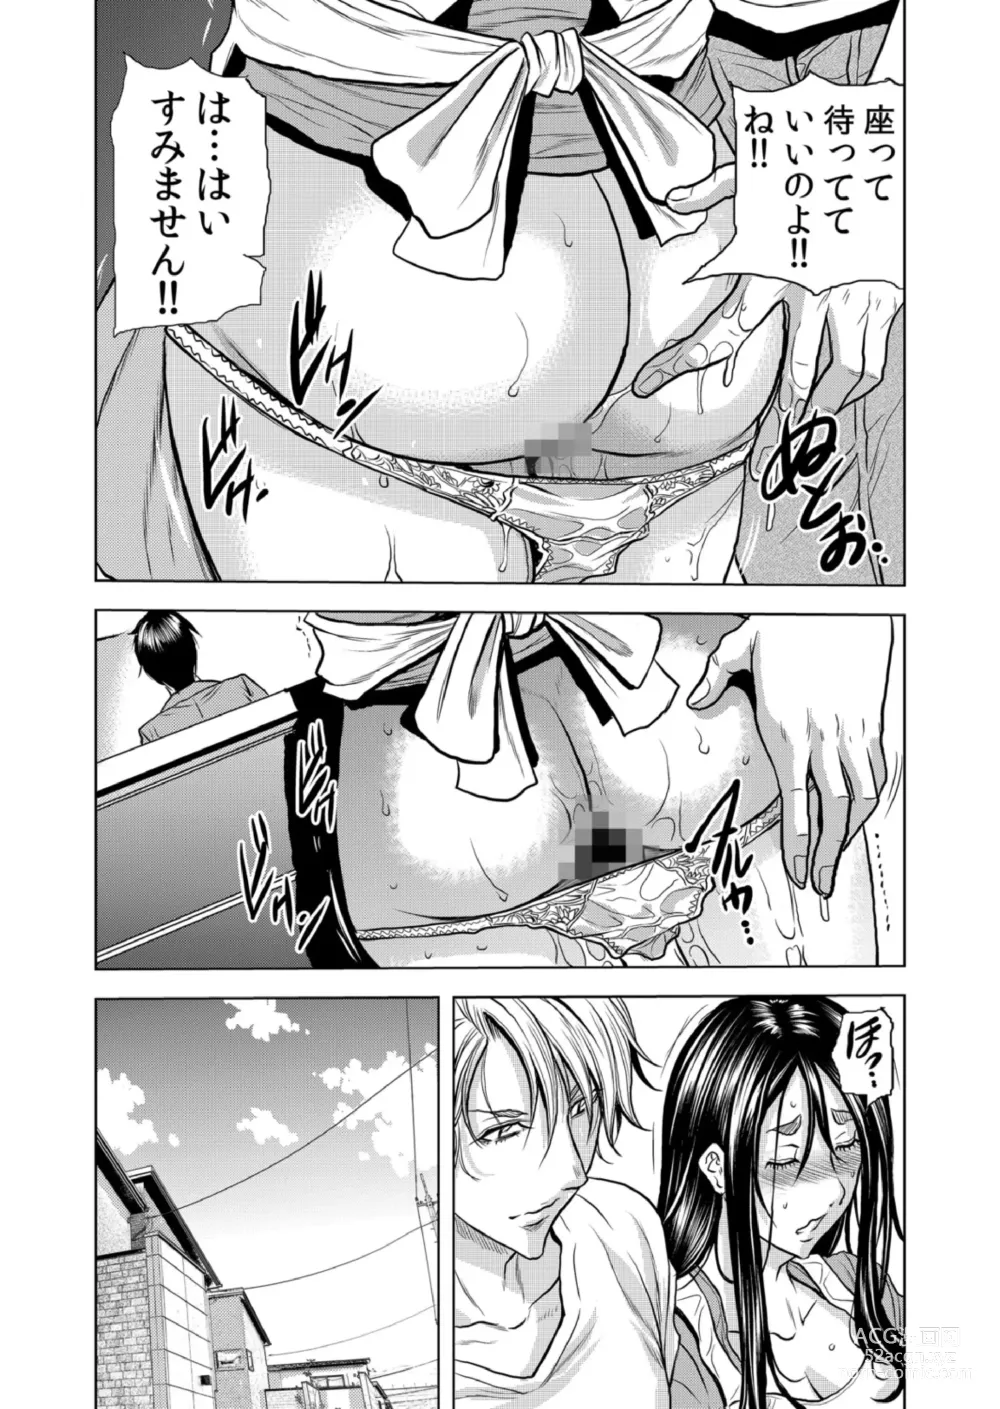 Page 12 of manga Mamasan,yobai ha OK desuka? VOL9